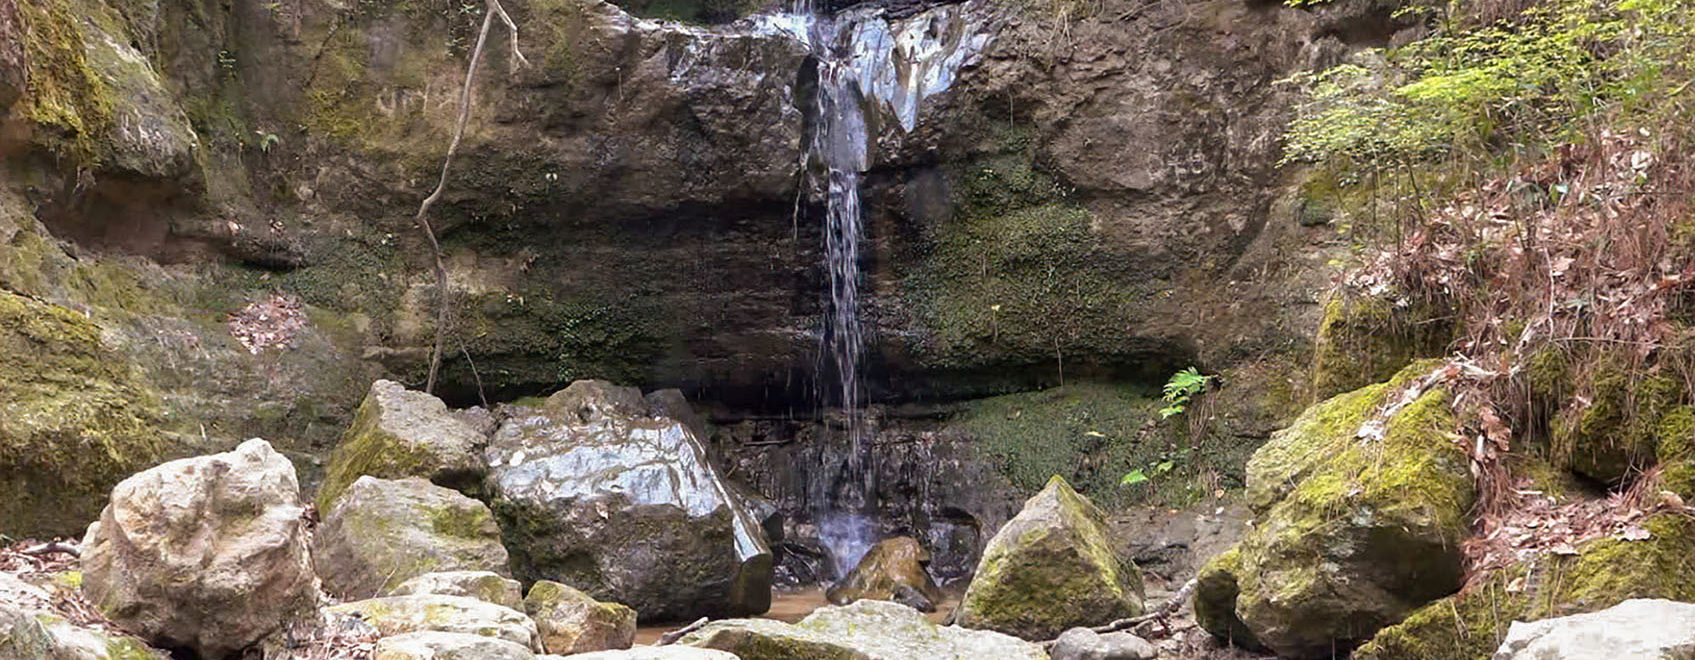 waterfall at Sicily Island Hills, Louisiana